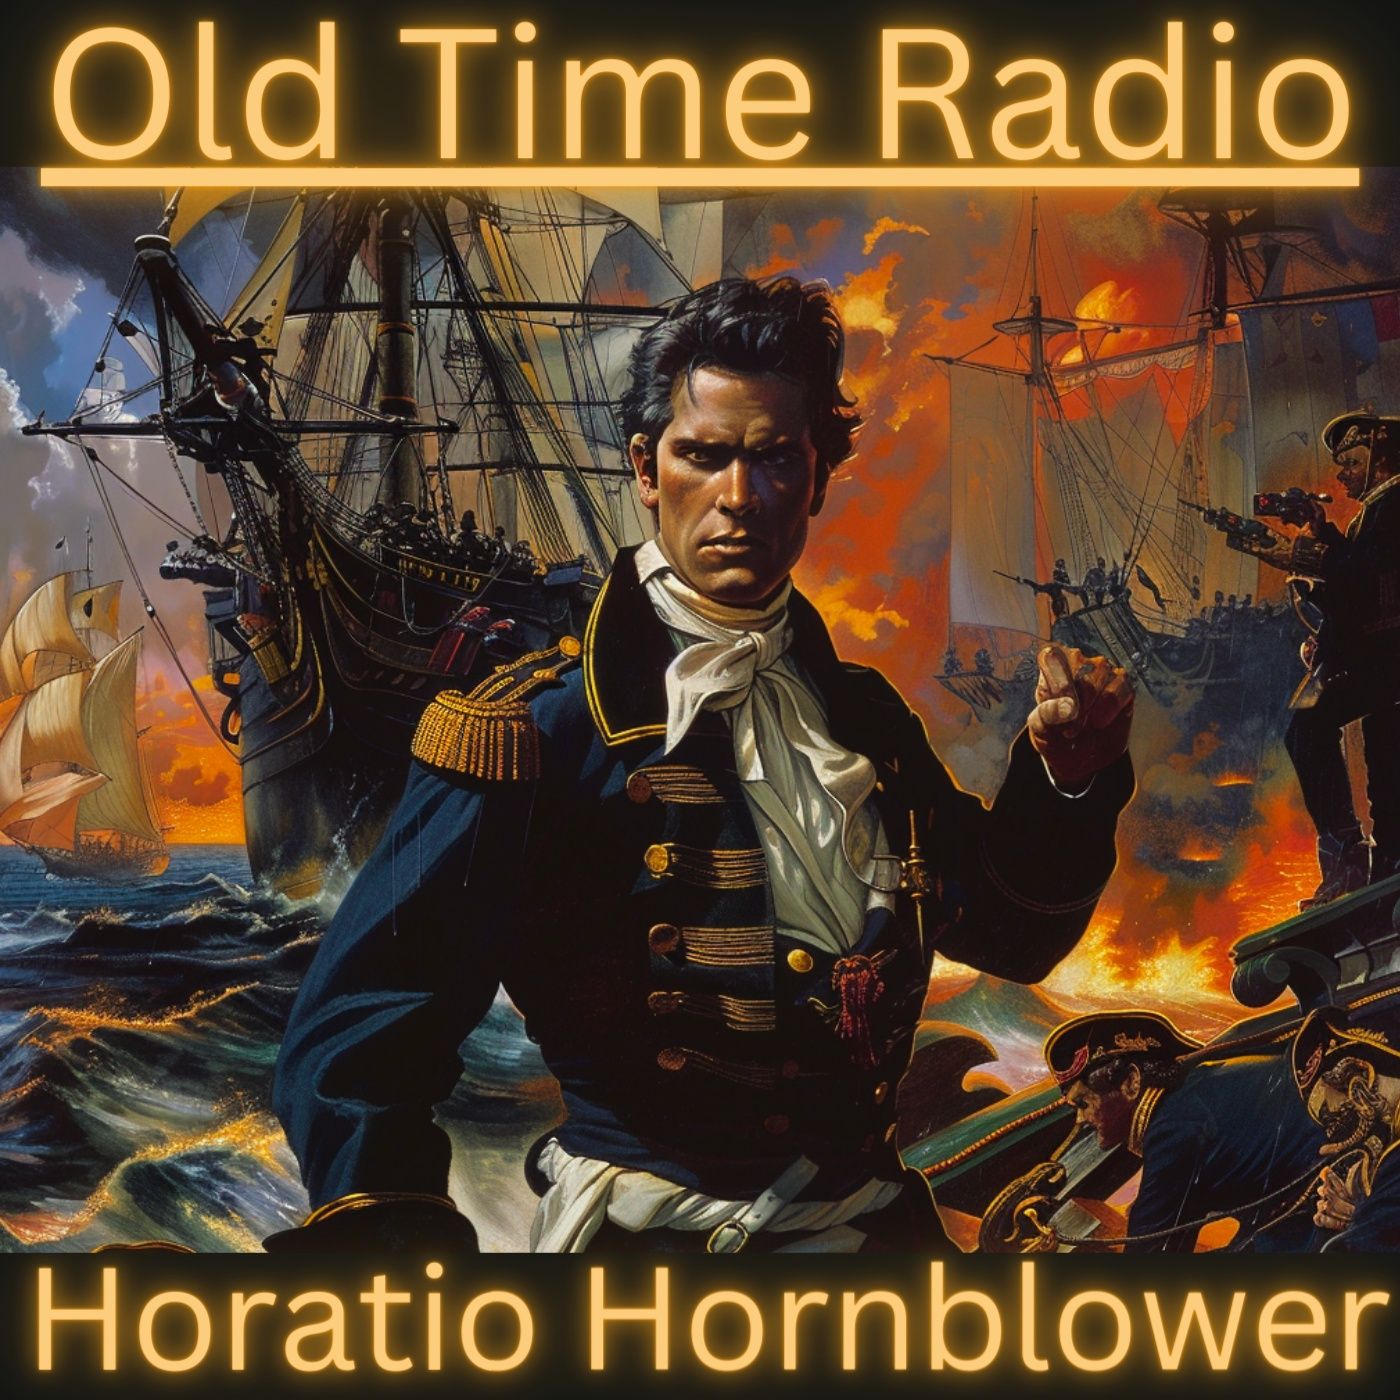 Old Time Radio Horatio Hornblower